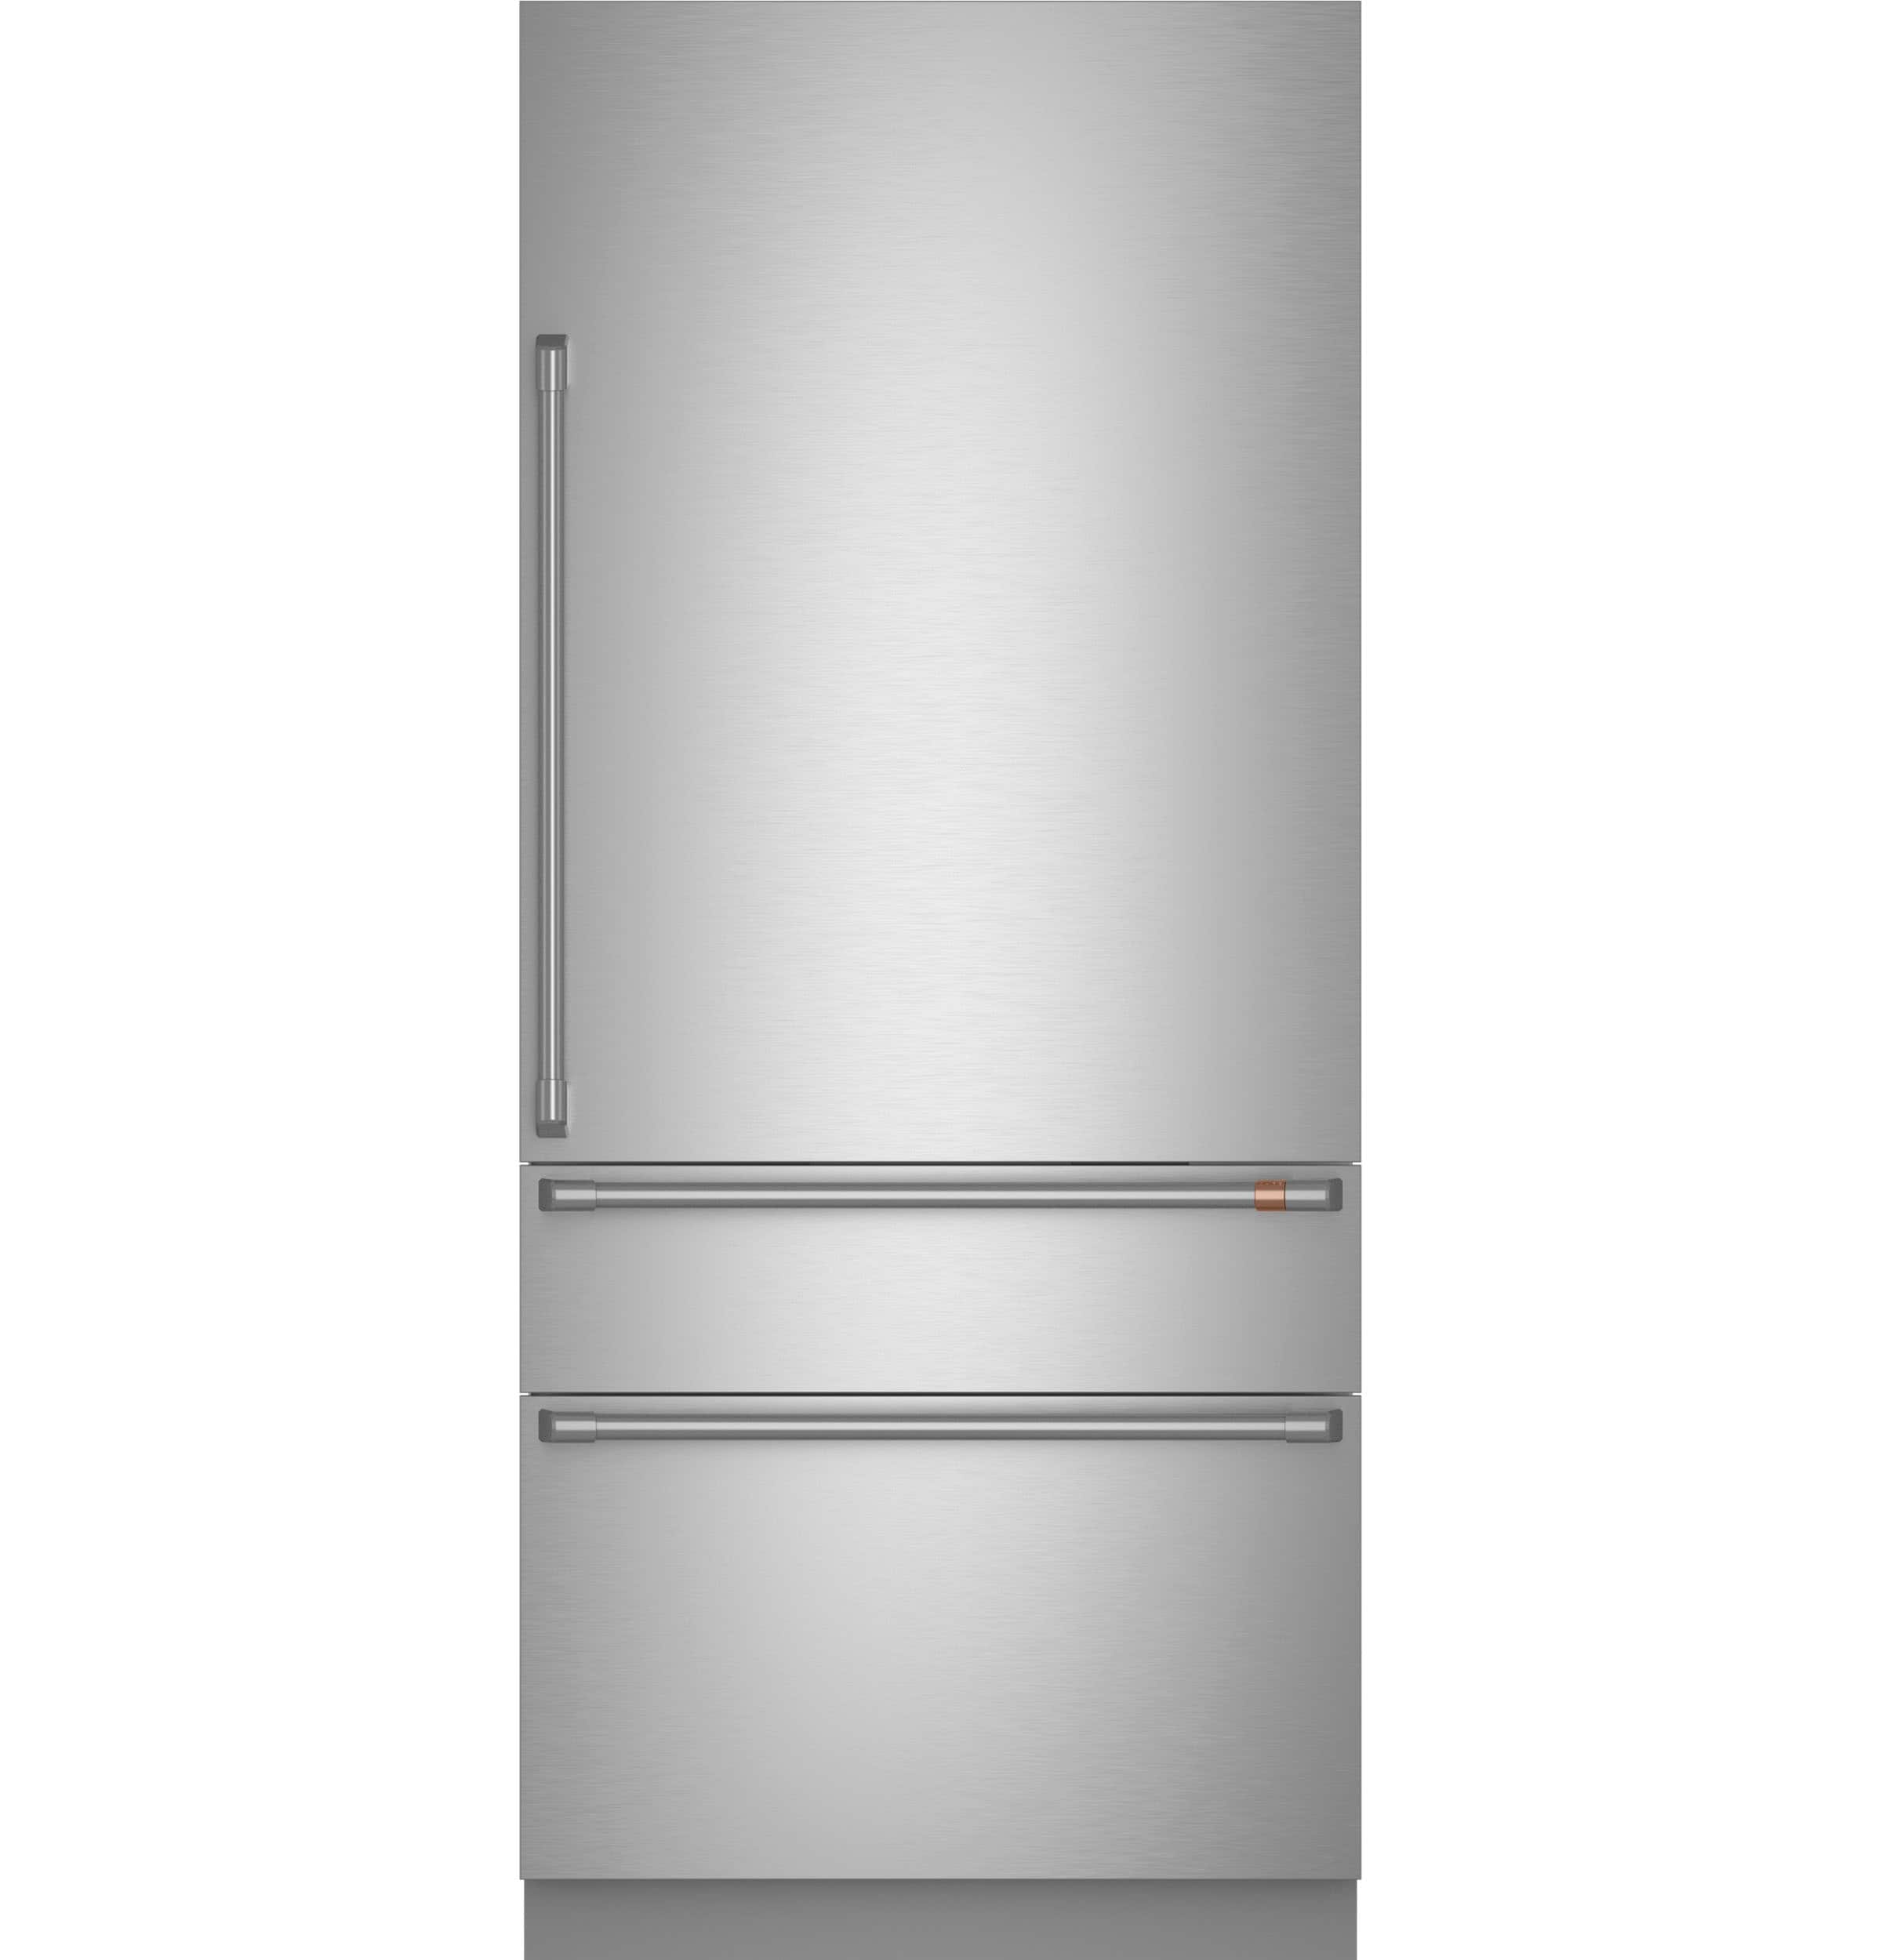 Magic Chef 10.1 cu. ft. Top Freezer Refrigerator in White